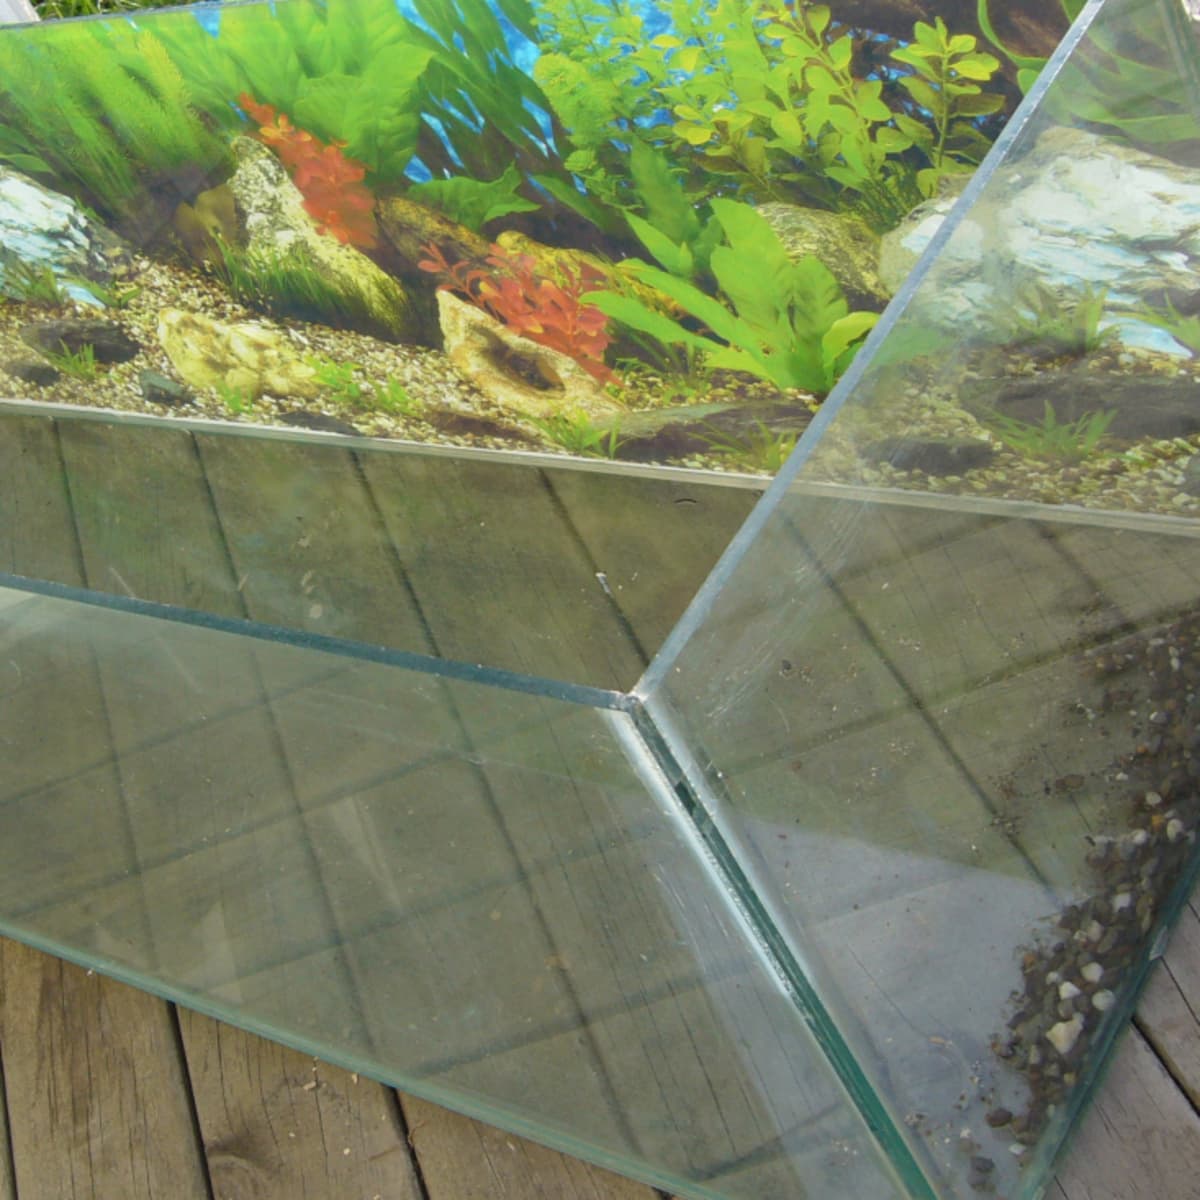 How to Clean Old Aquarium Glass? 